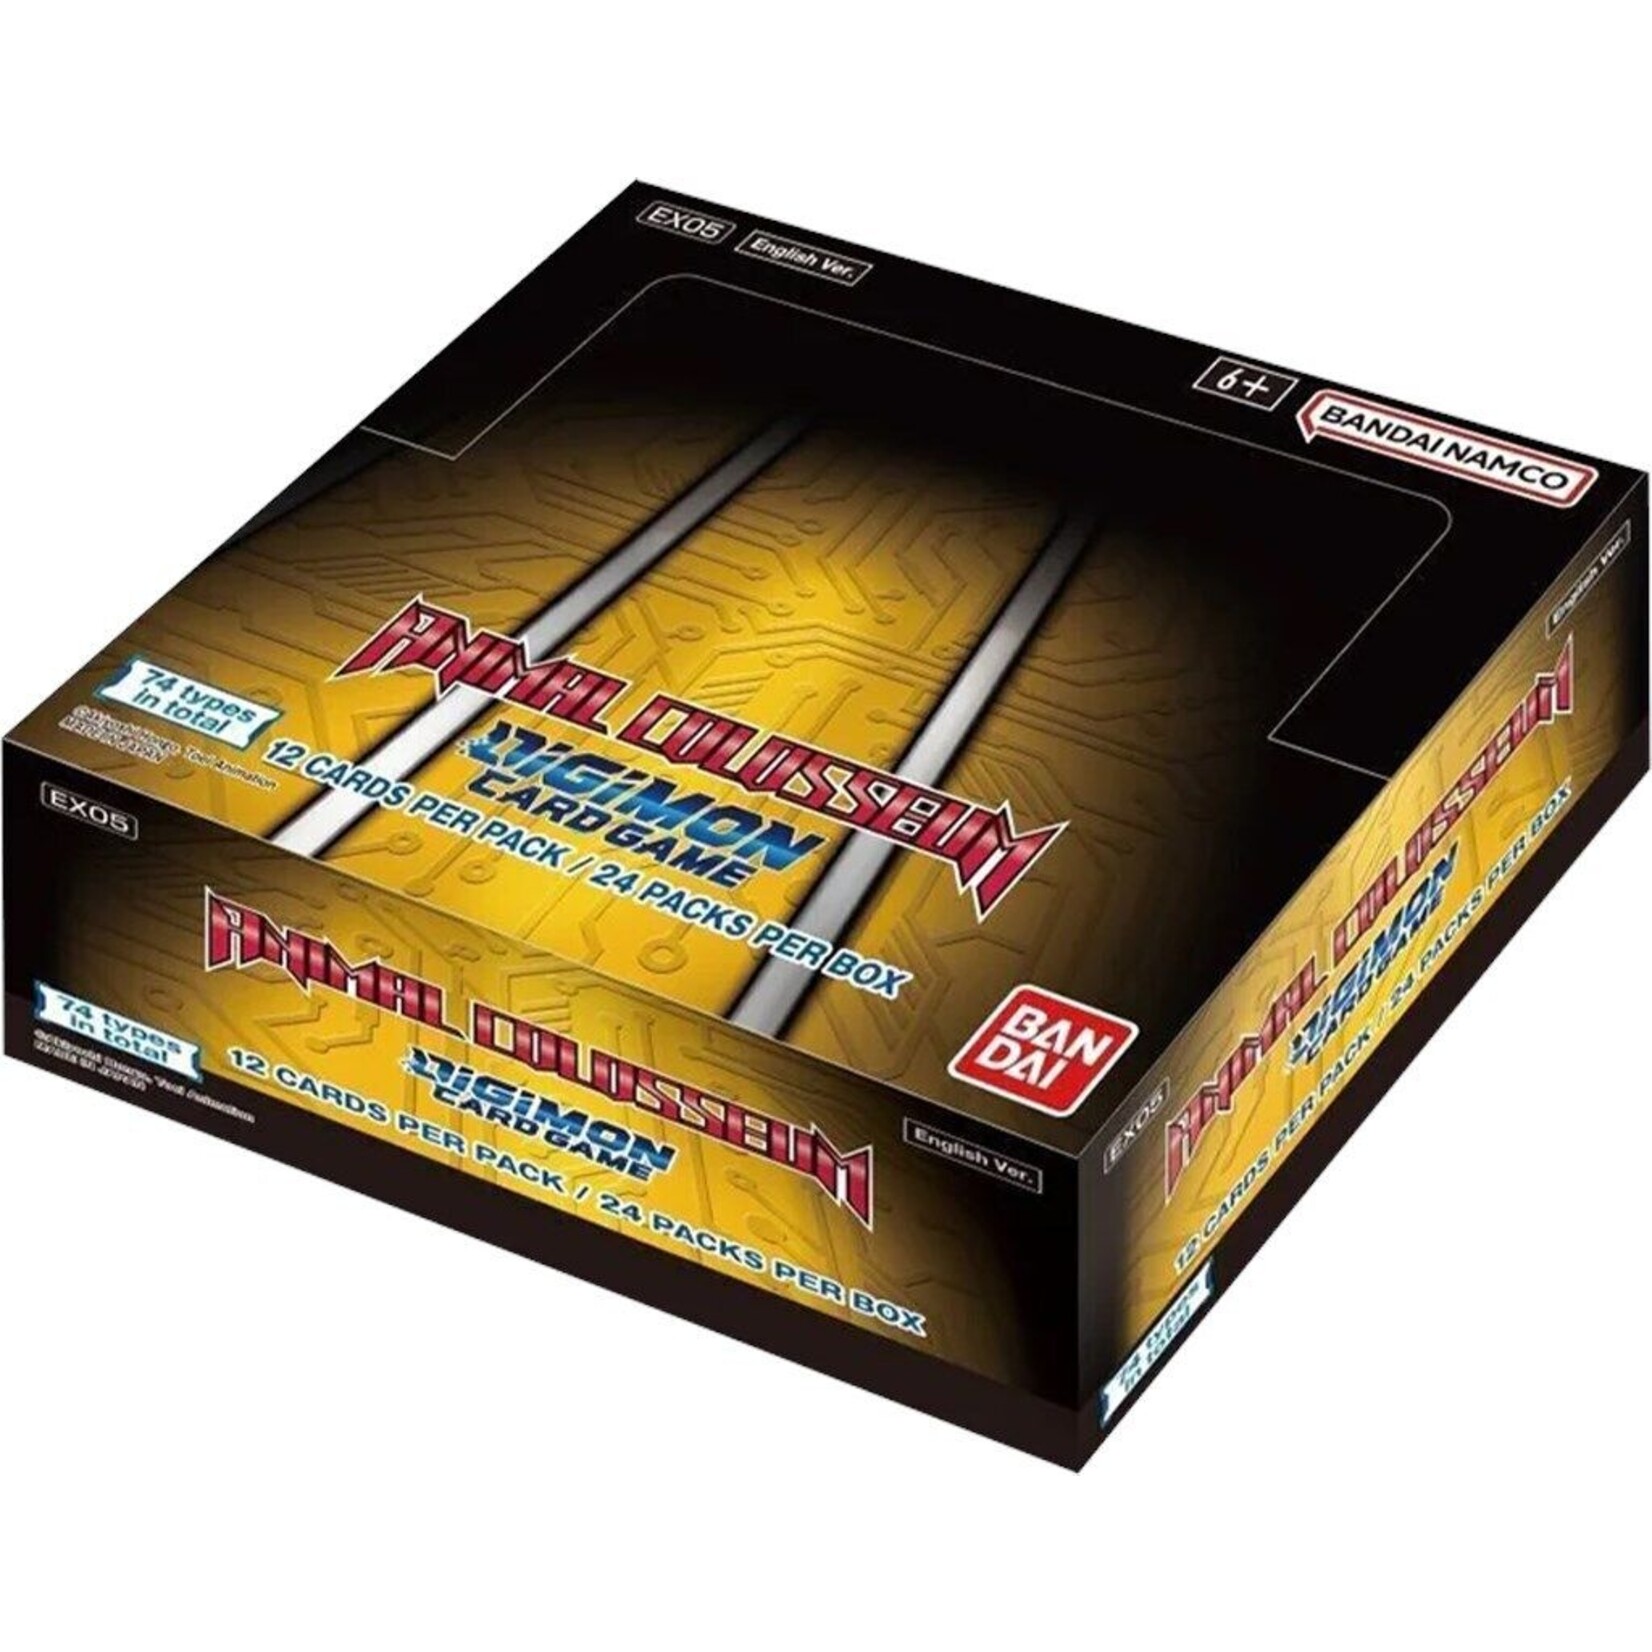 Digimon Animal Colosseum Booster Box